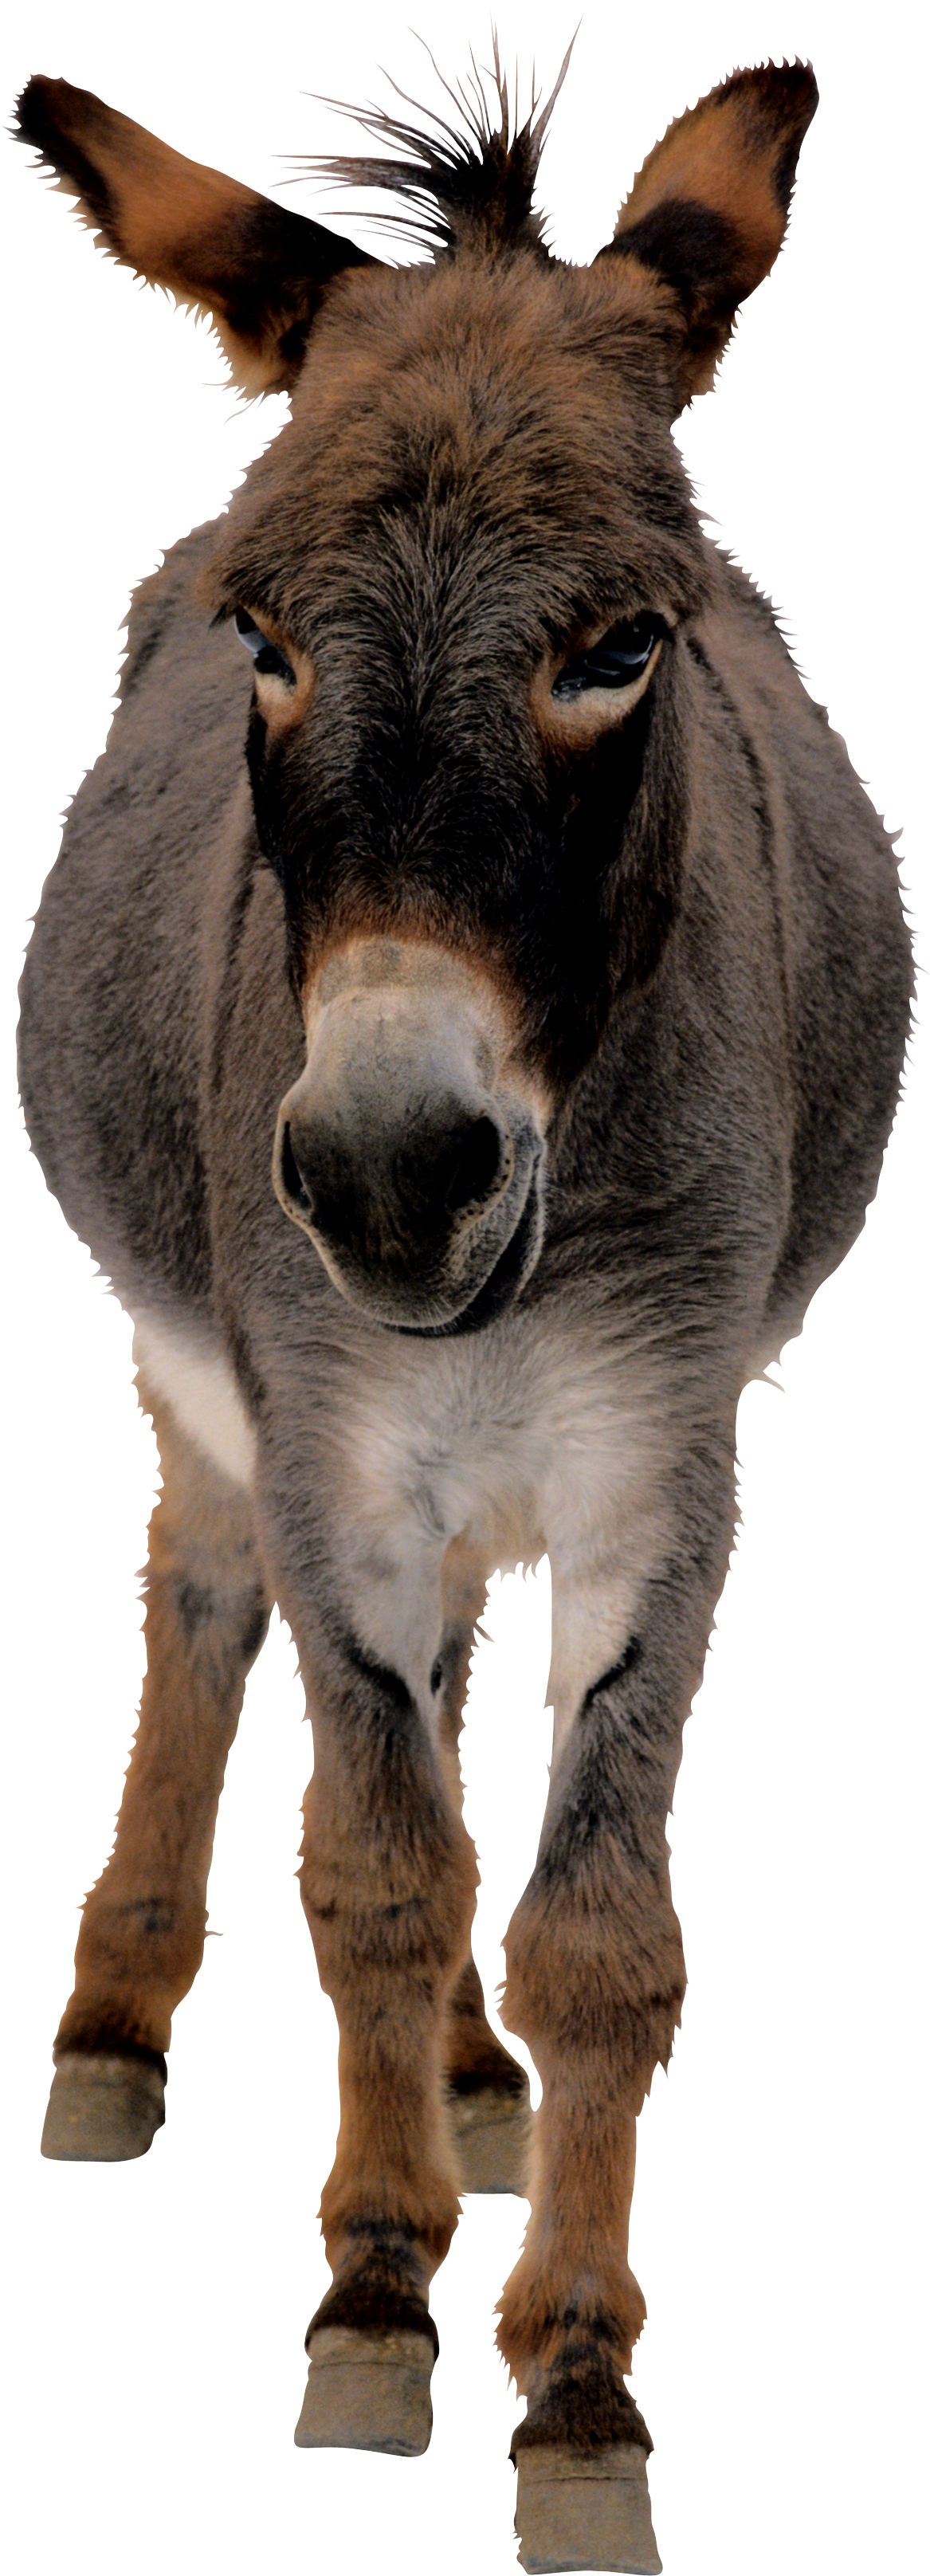 Donkey Mule Free HD Image PNG Image